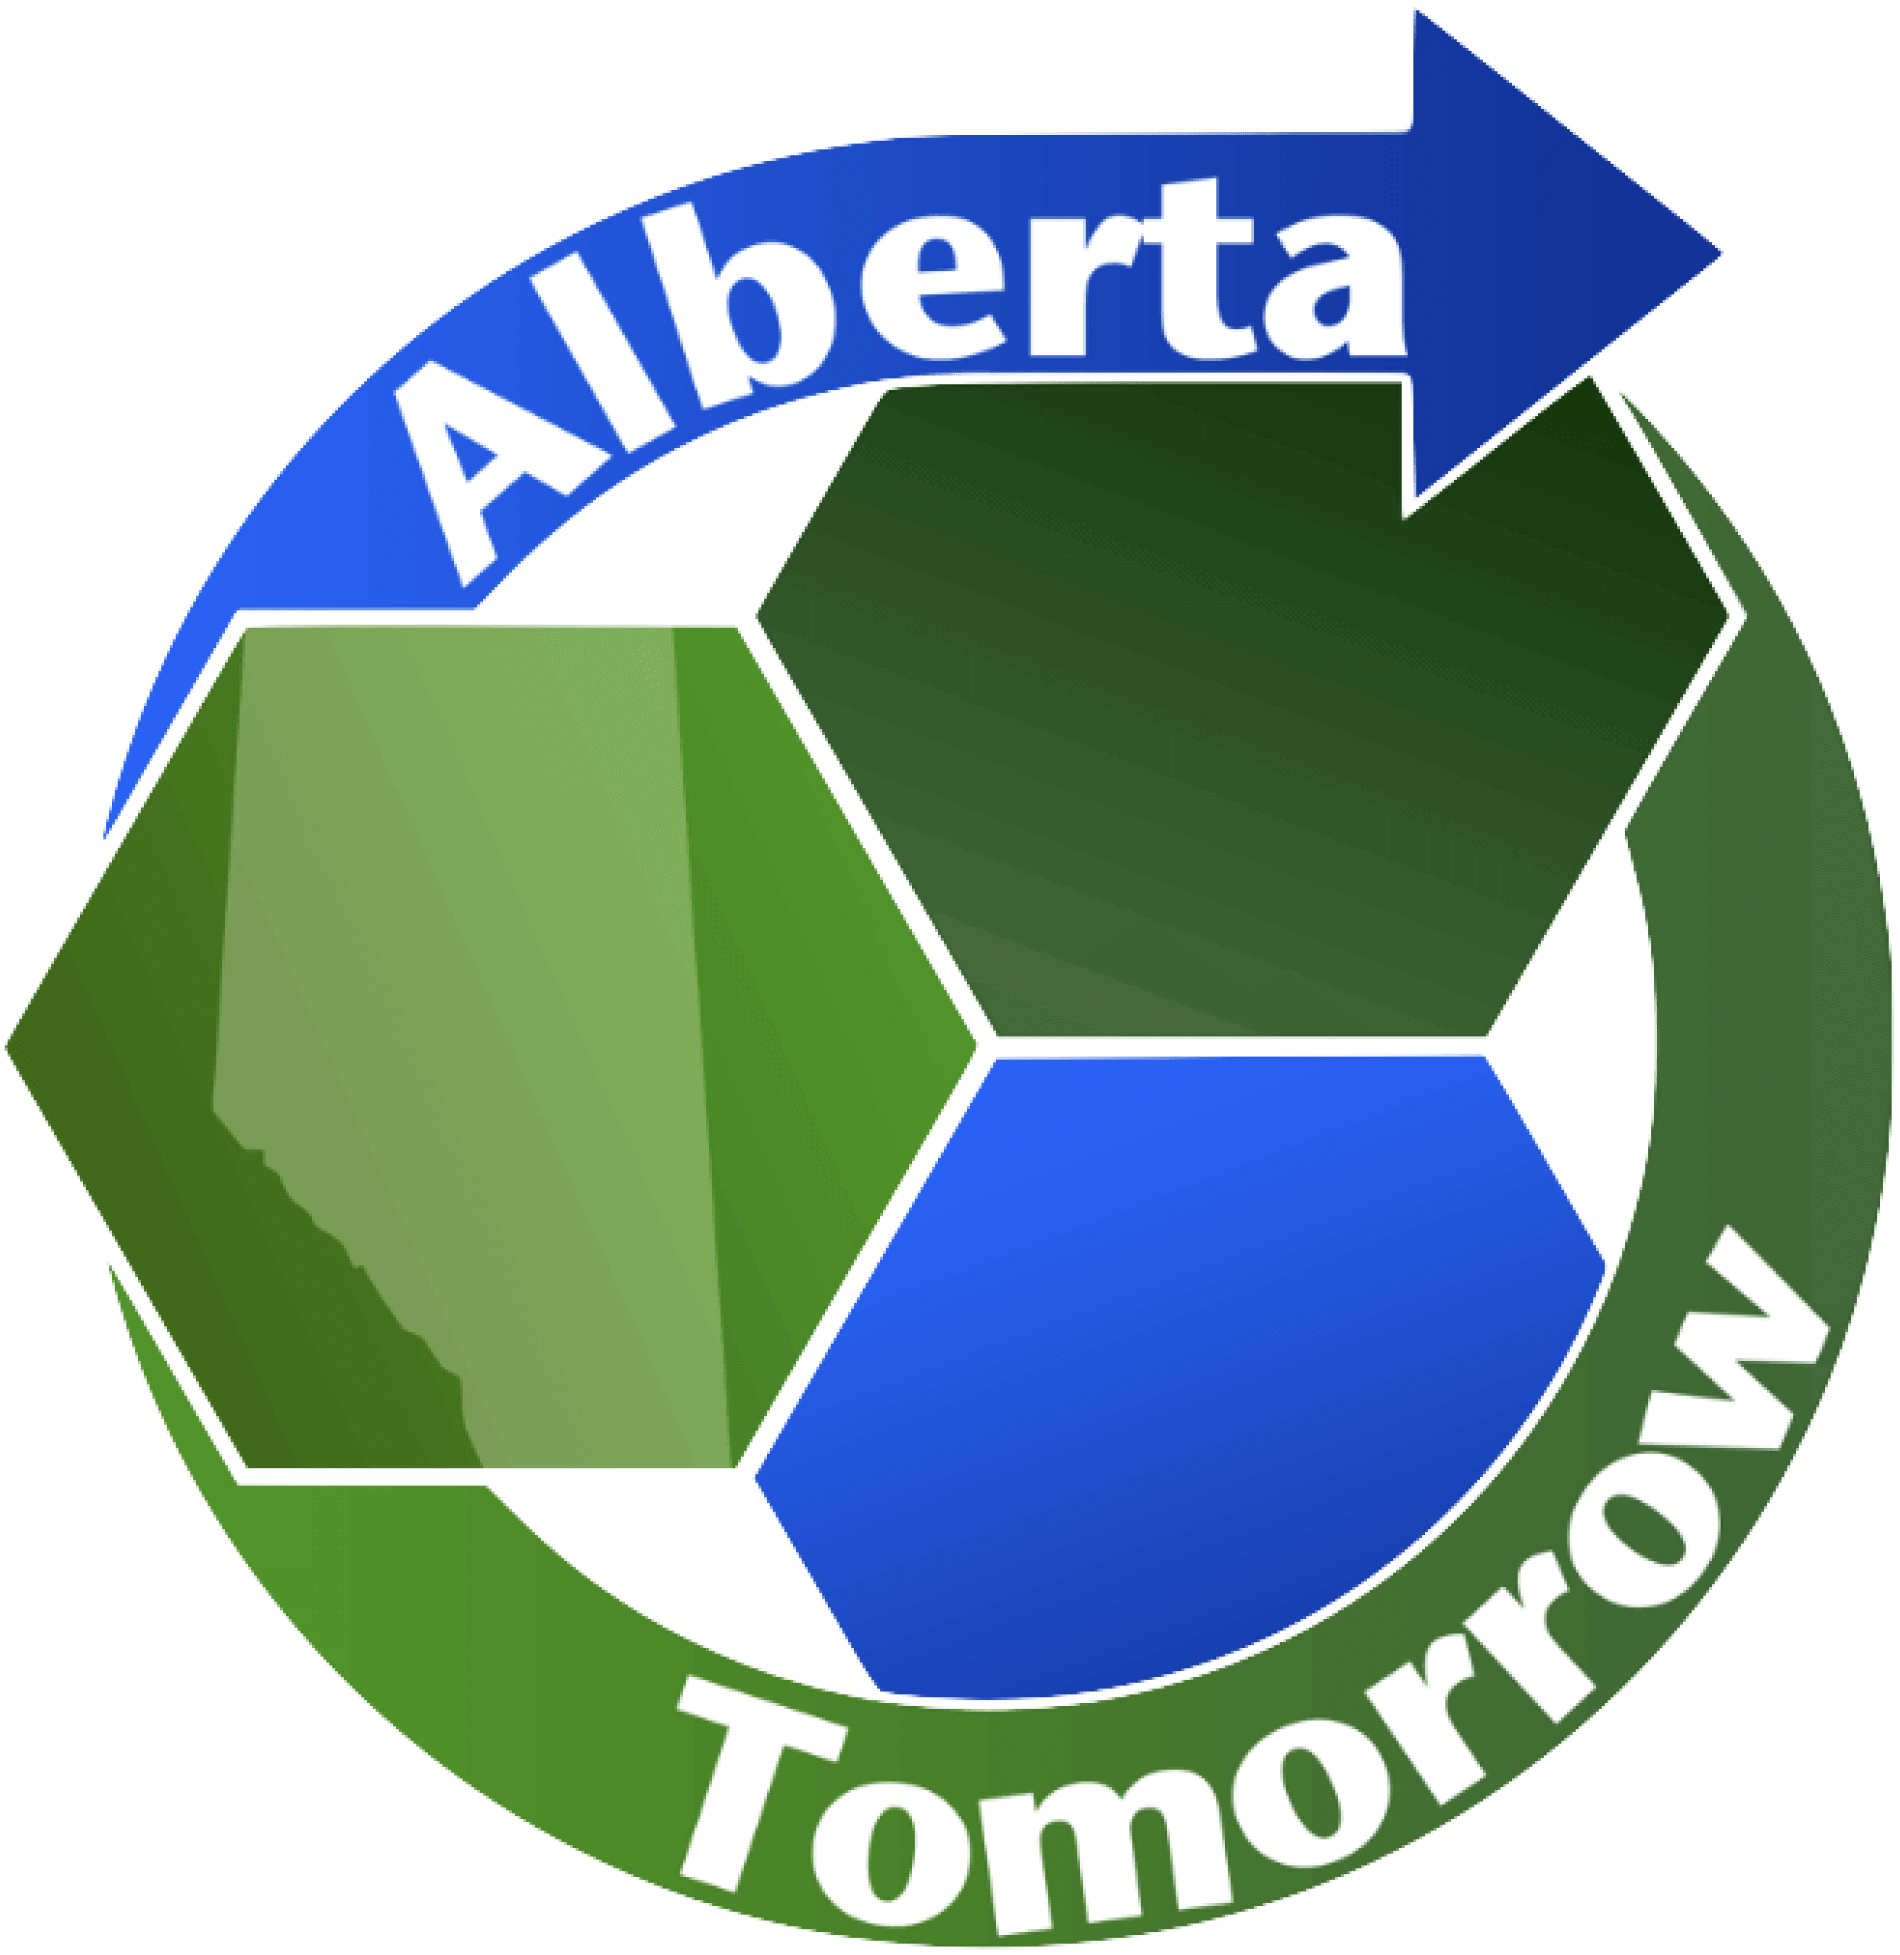 Alberta Tomorrow logo on transparent background